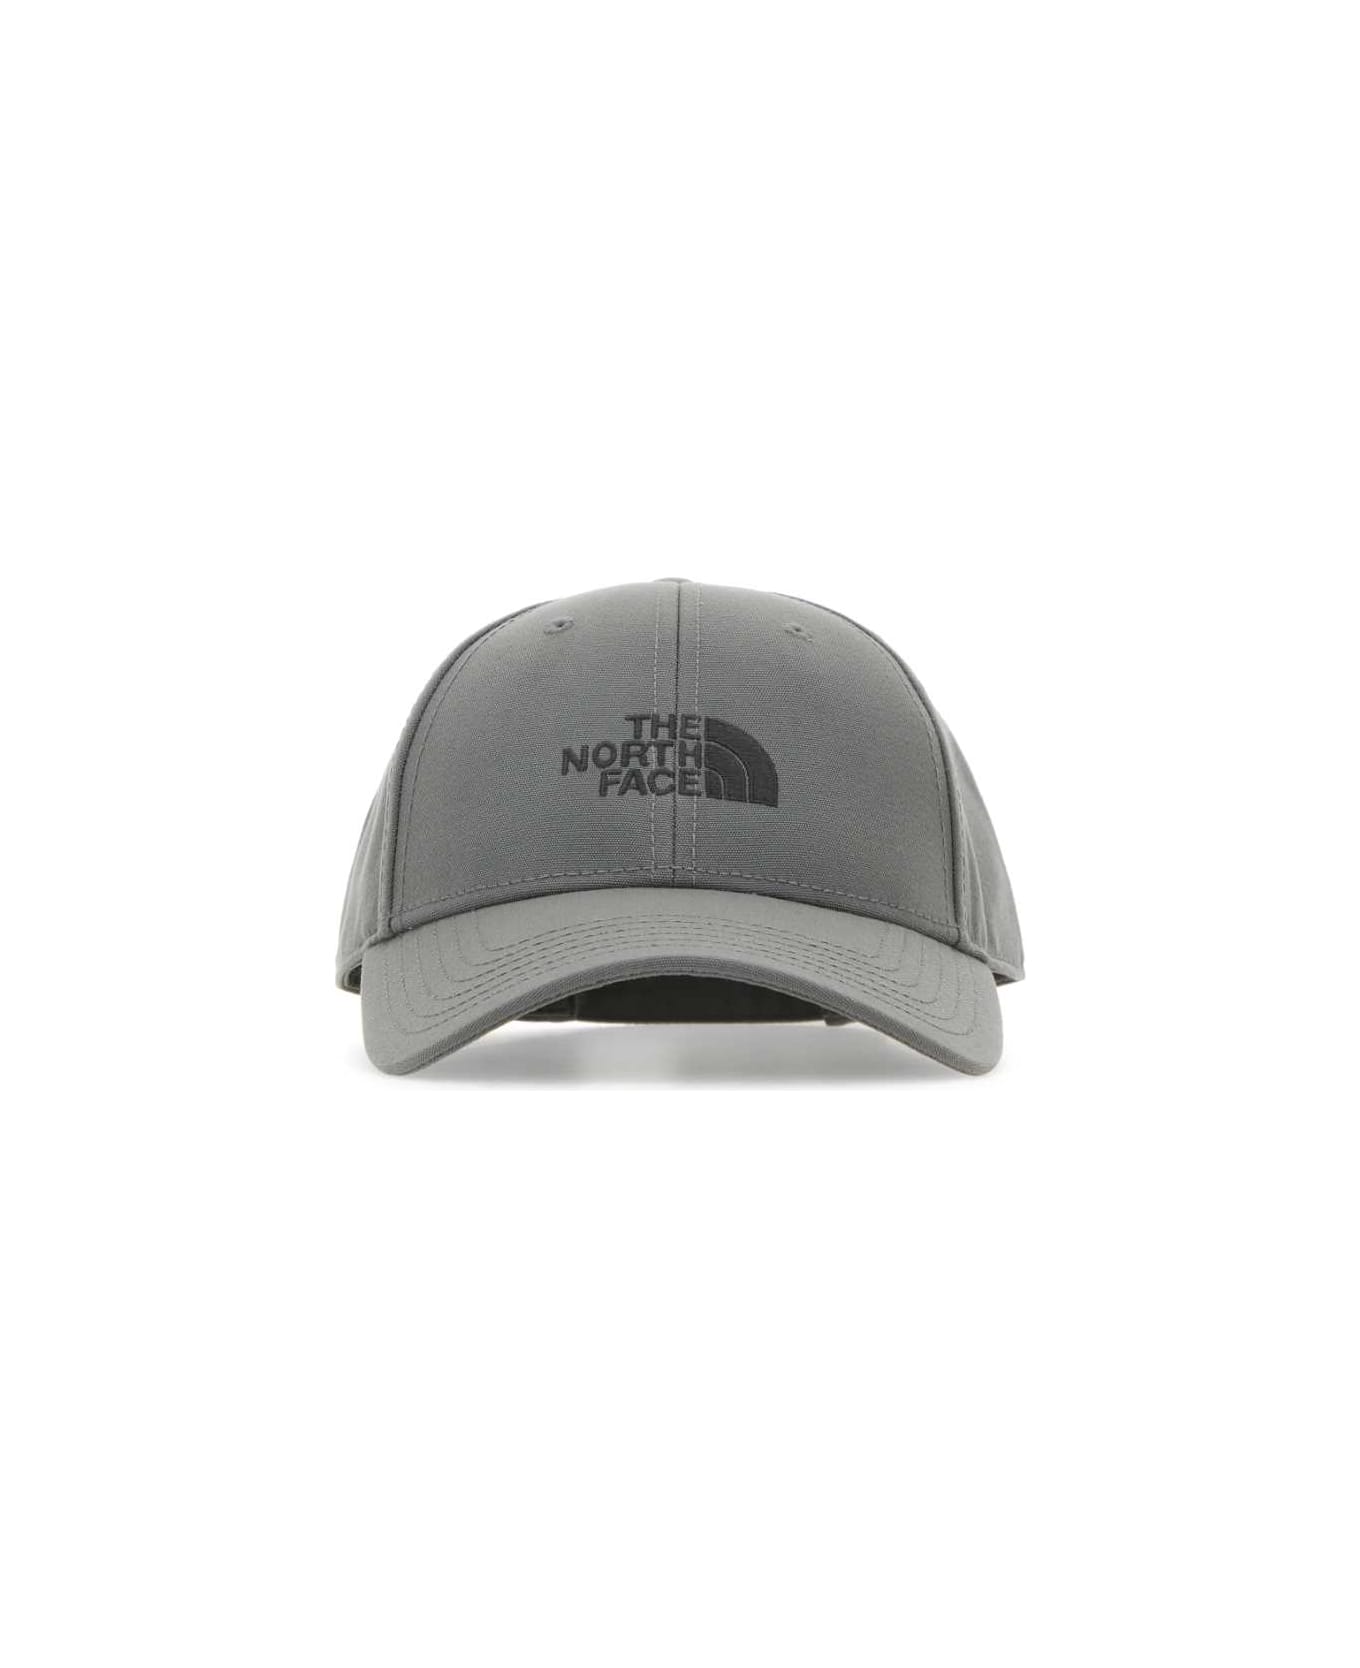 The North Face Grey Polyester Baseball Cap - SMOKEDPEARLASPHALTGREY 帽子